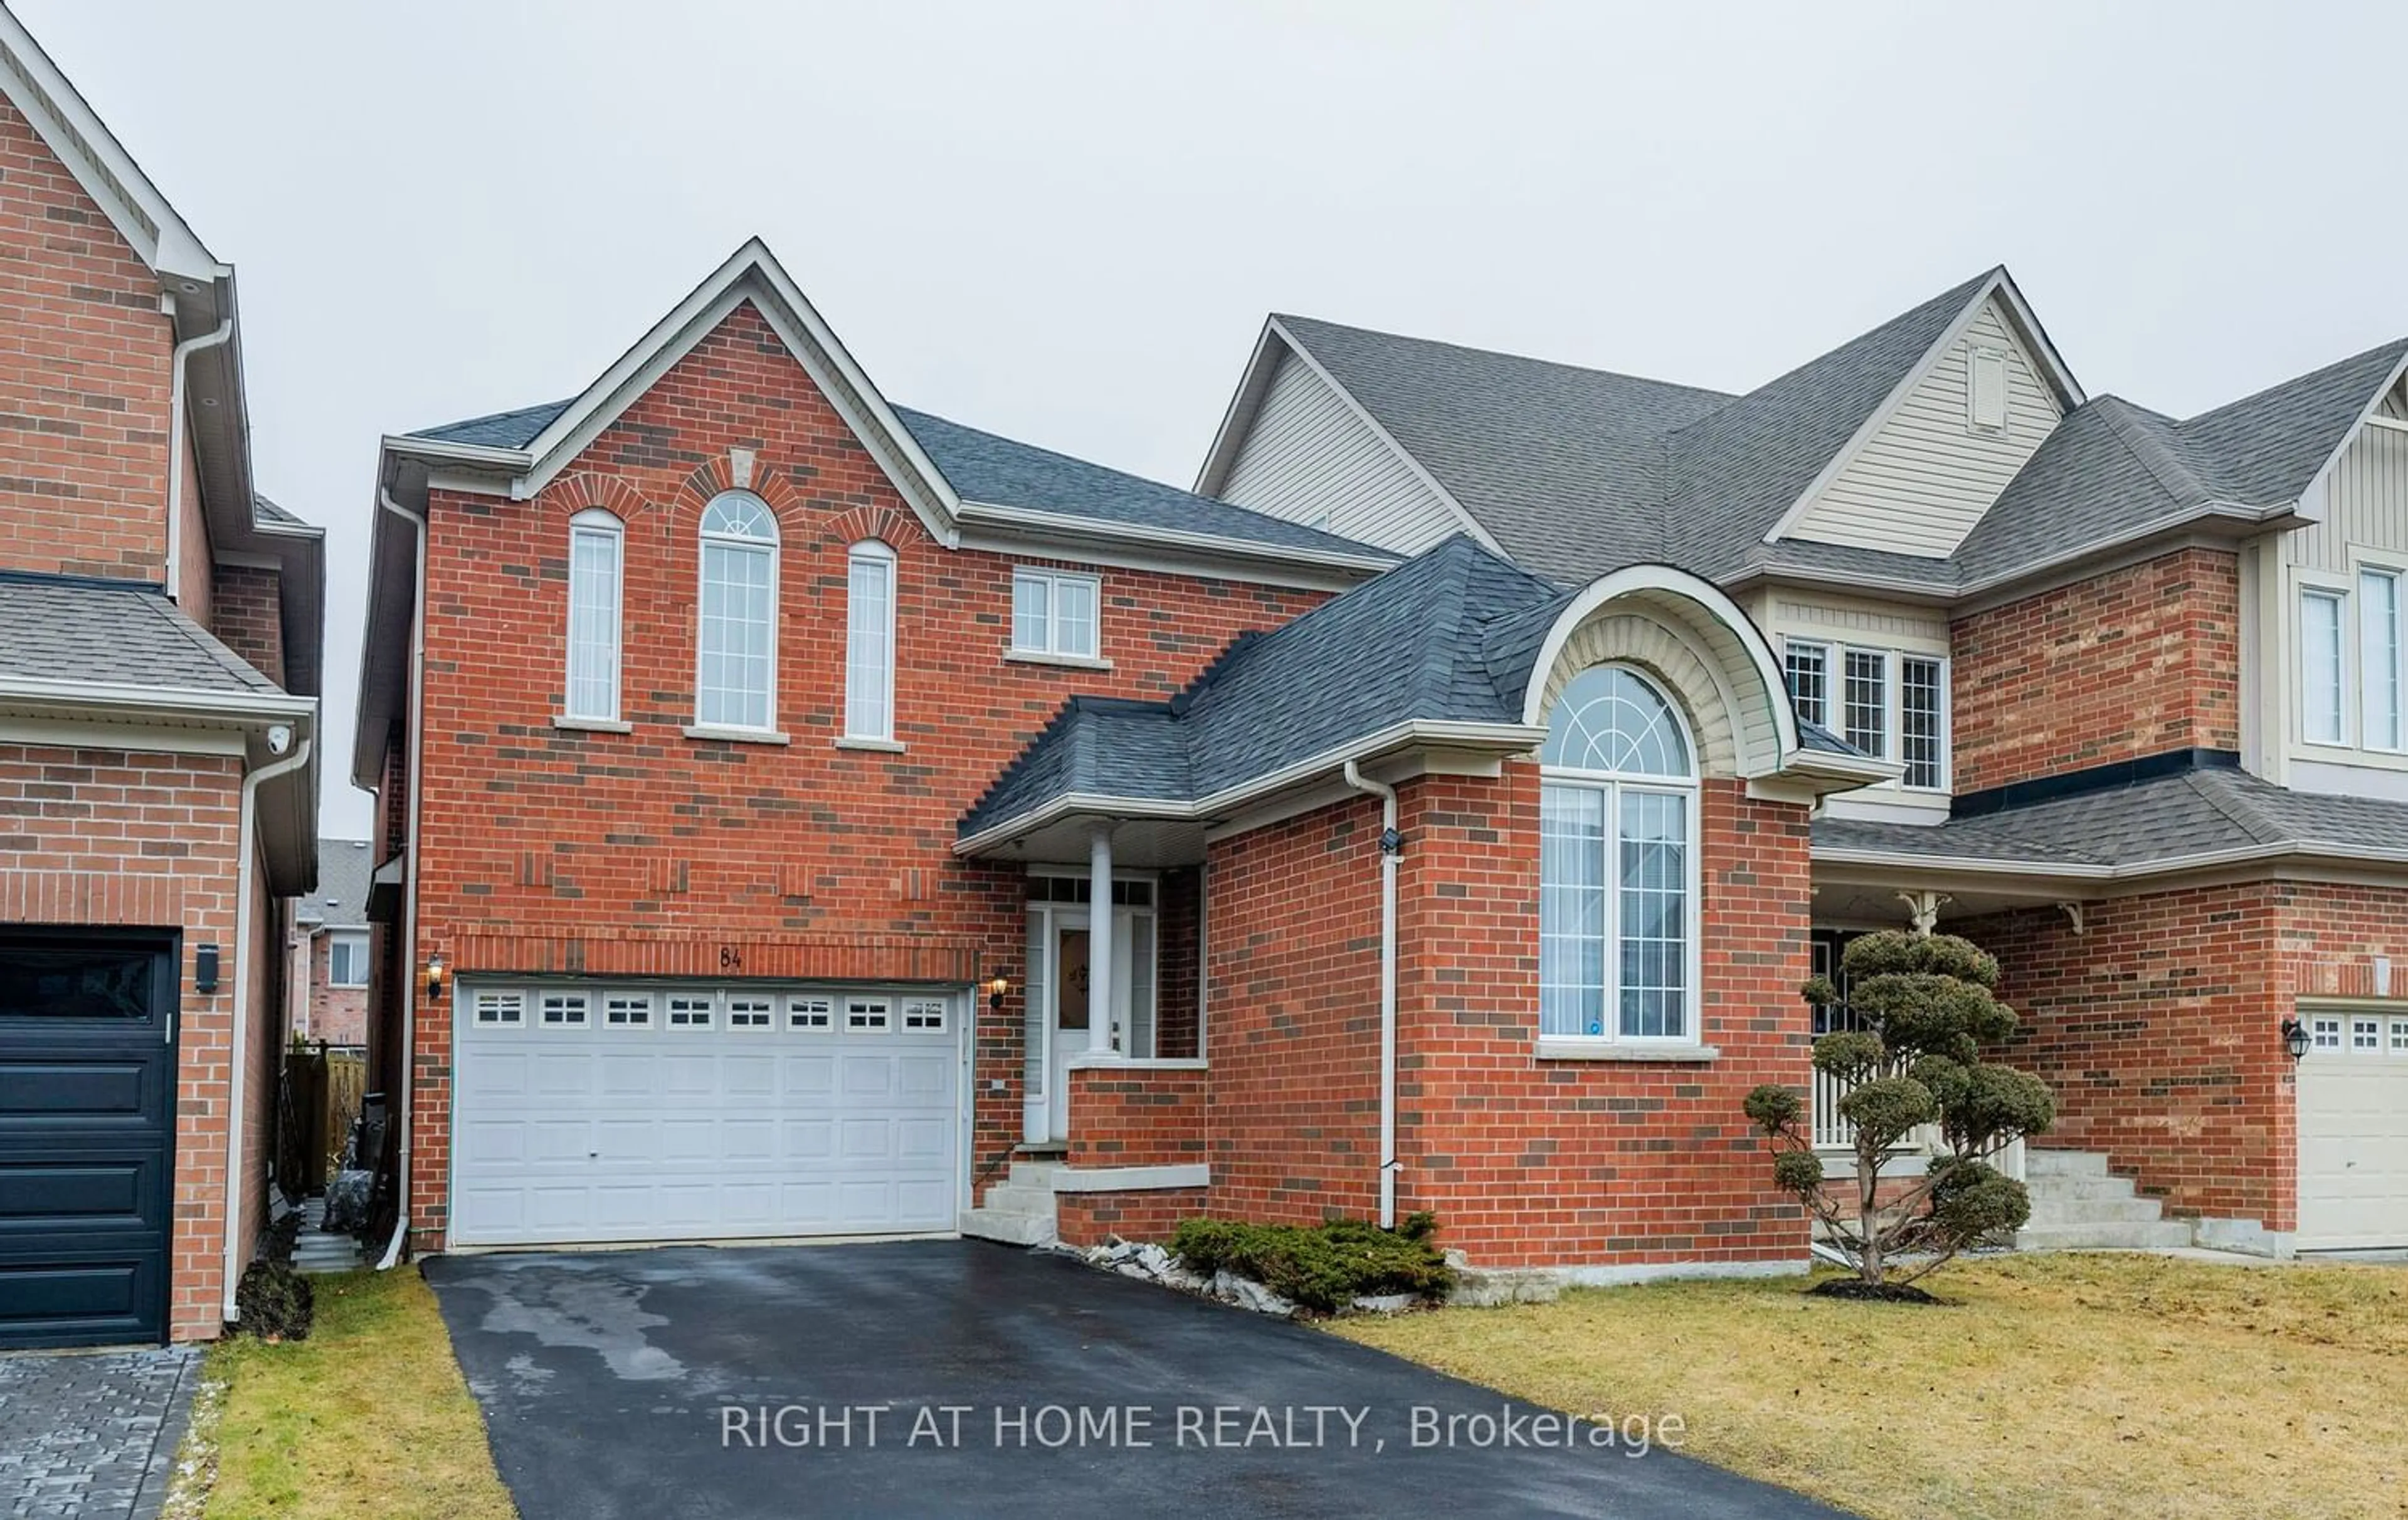 Home with brick exterior material for 84 Verdi Rd, Richmond Hill Ontario L4E 4P6